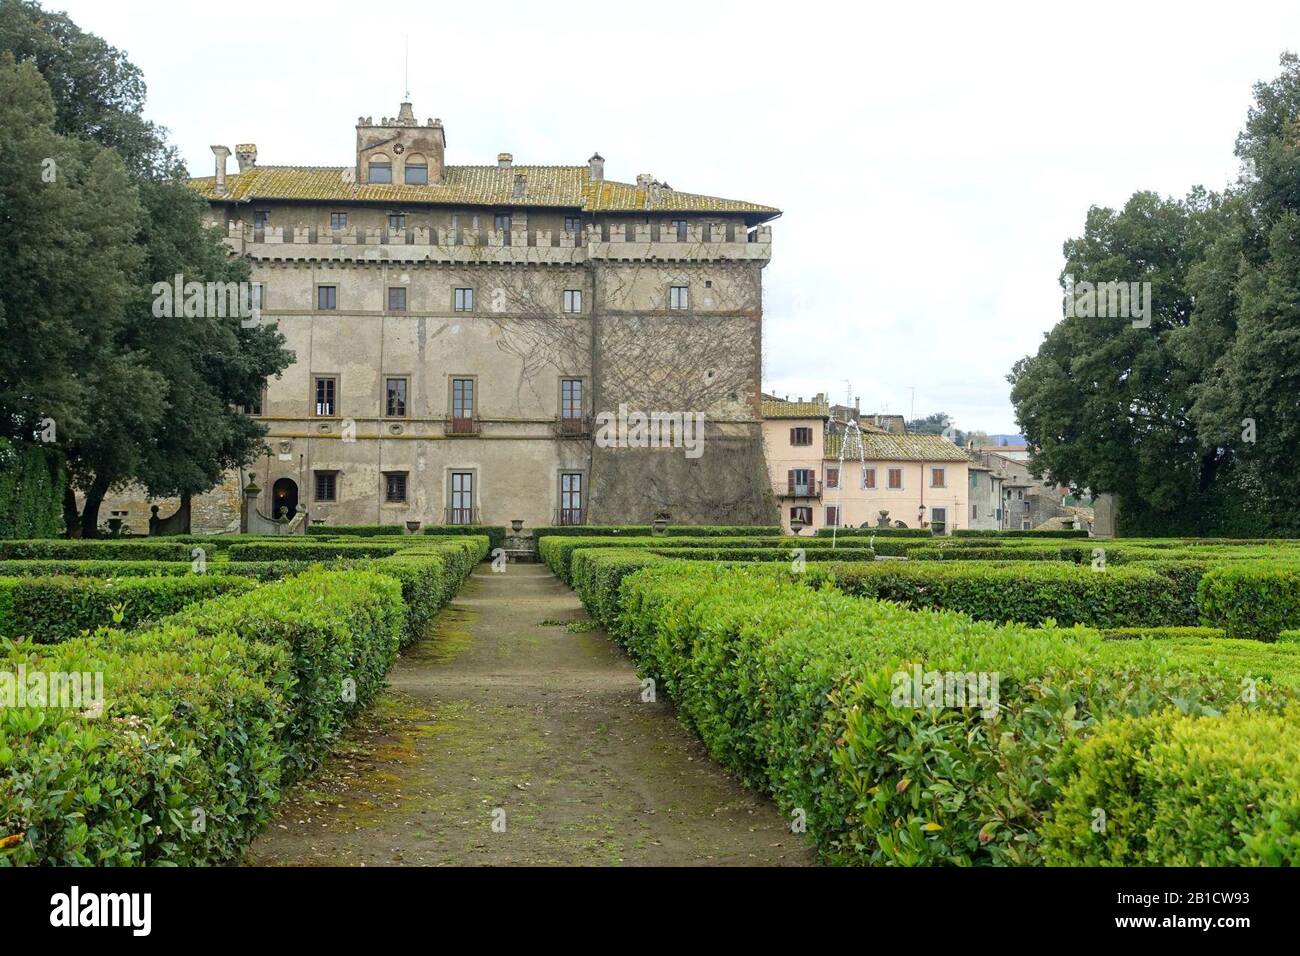 Garden view - Castello Ruspoli - Vignanello, Italy - Stock Photo